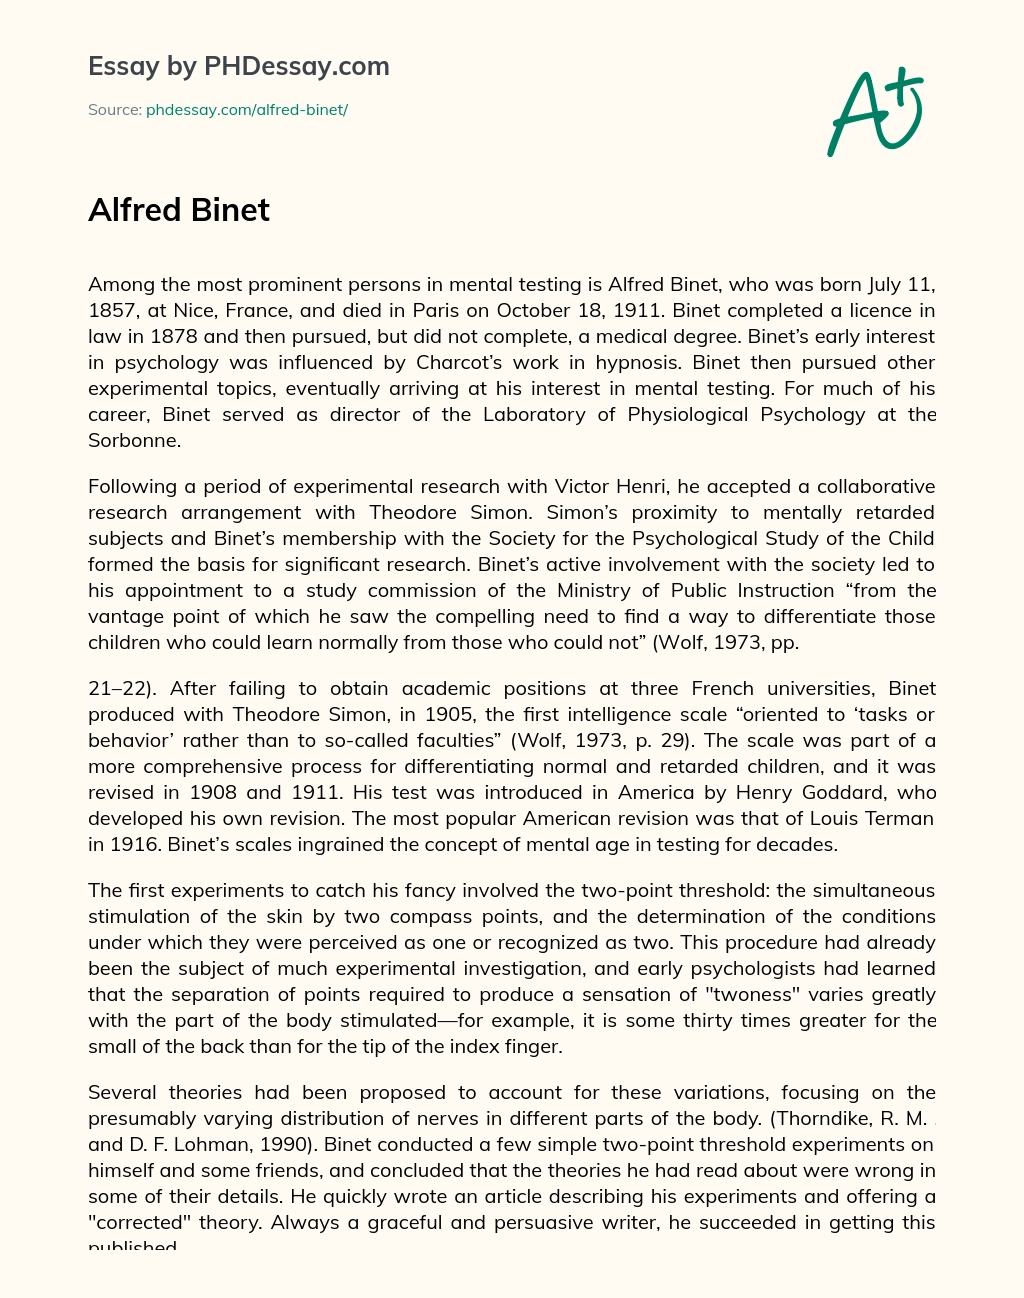 Alfred Binet: A Prominent Figure in Mental Testing essay